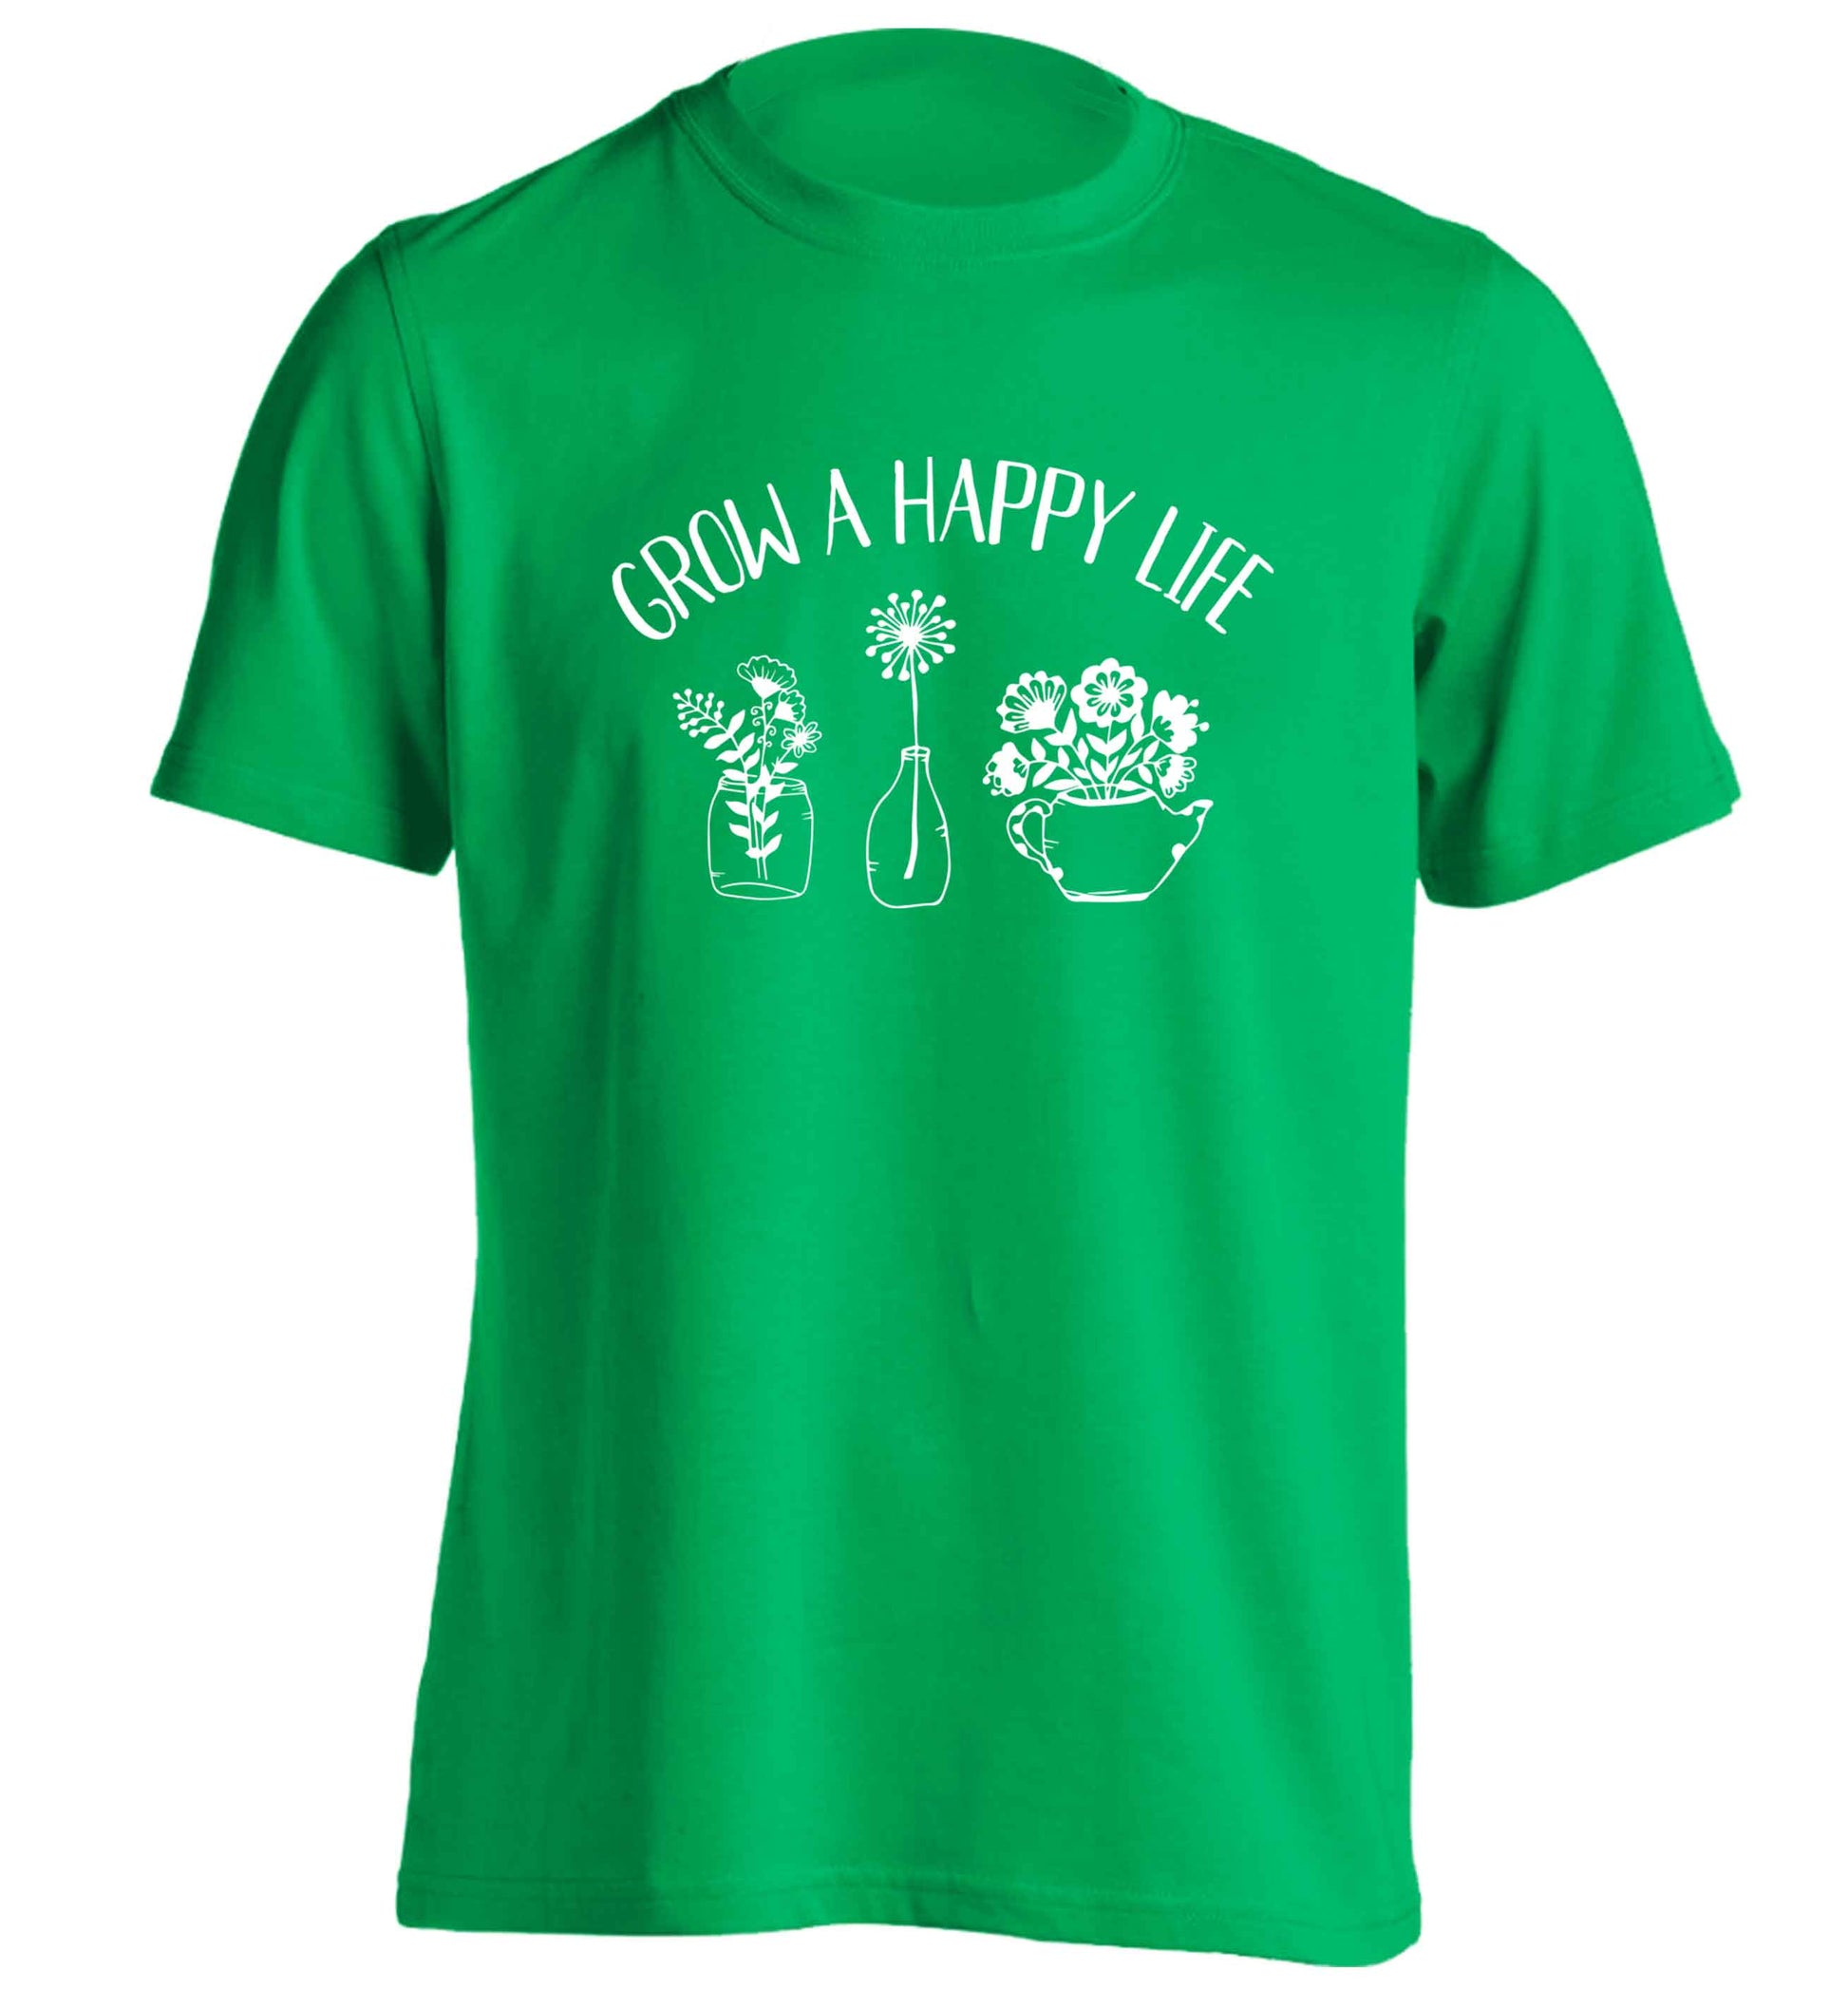 Grow a happy life adults unisex green Tshirt 2XL